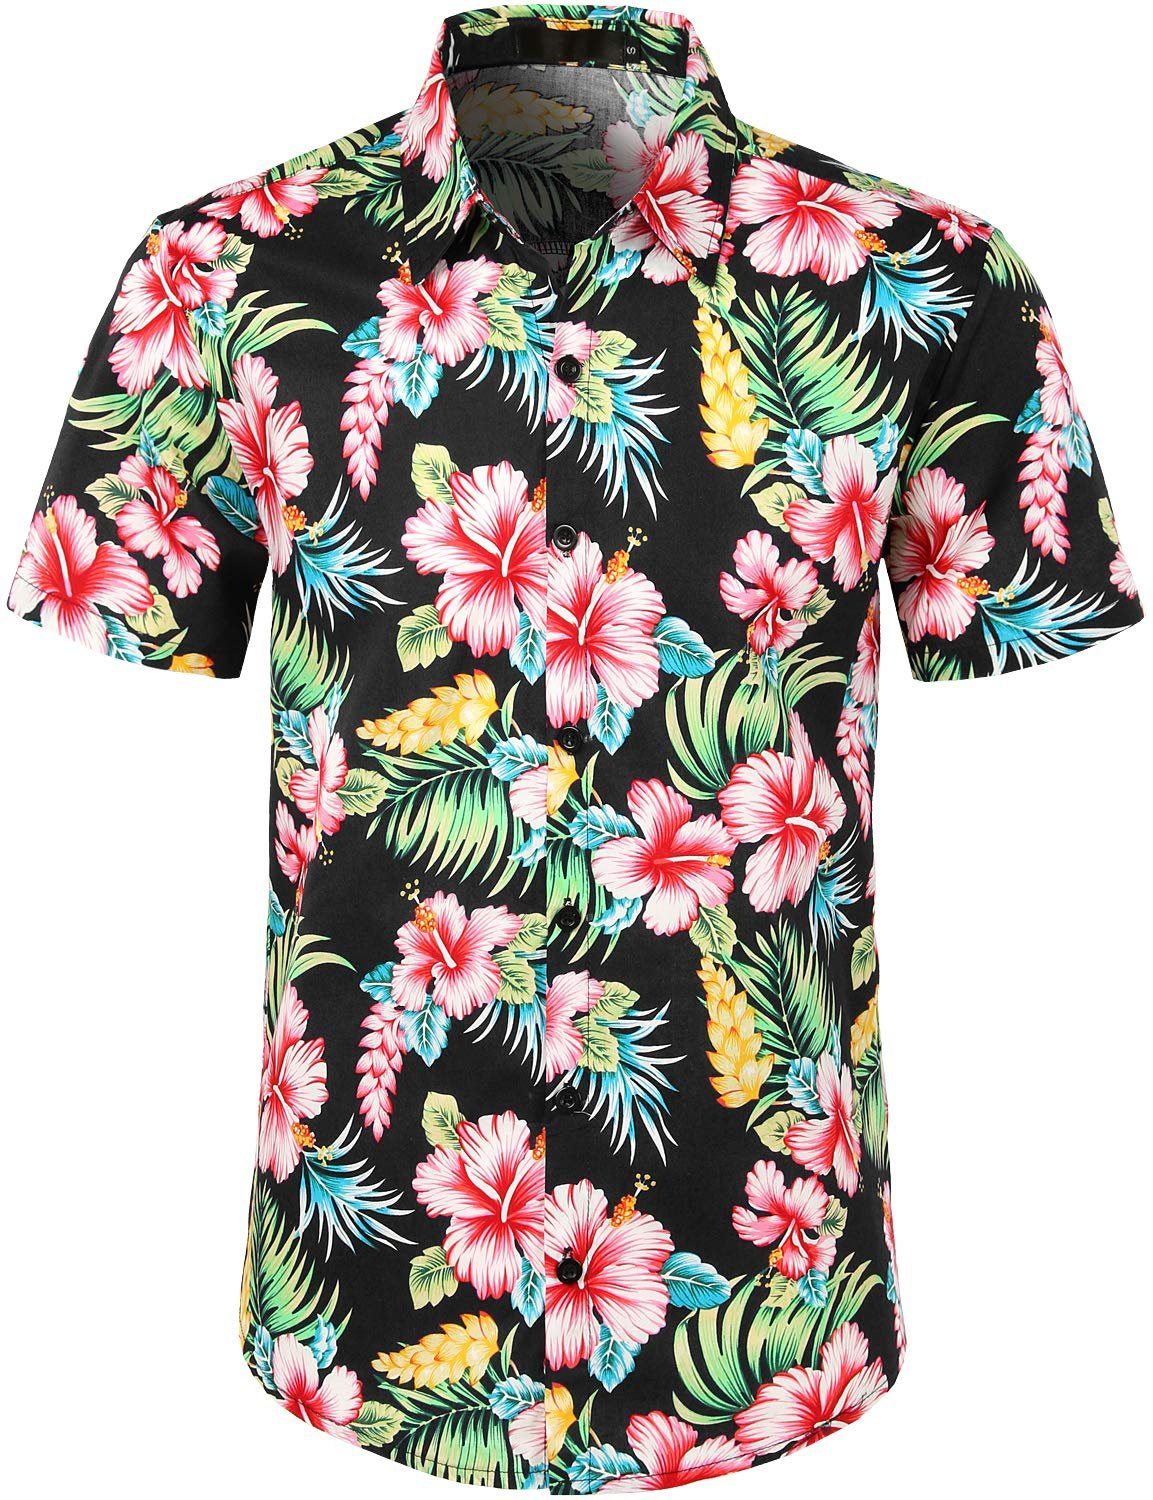 Moorle Kurzarmhemd Herren Blumen Kurzarm Knopfleiste Baumwolle Hawaii Hemd